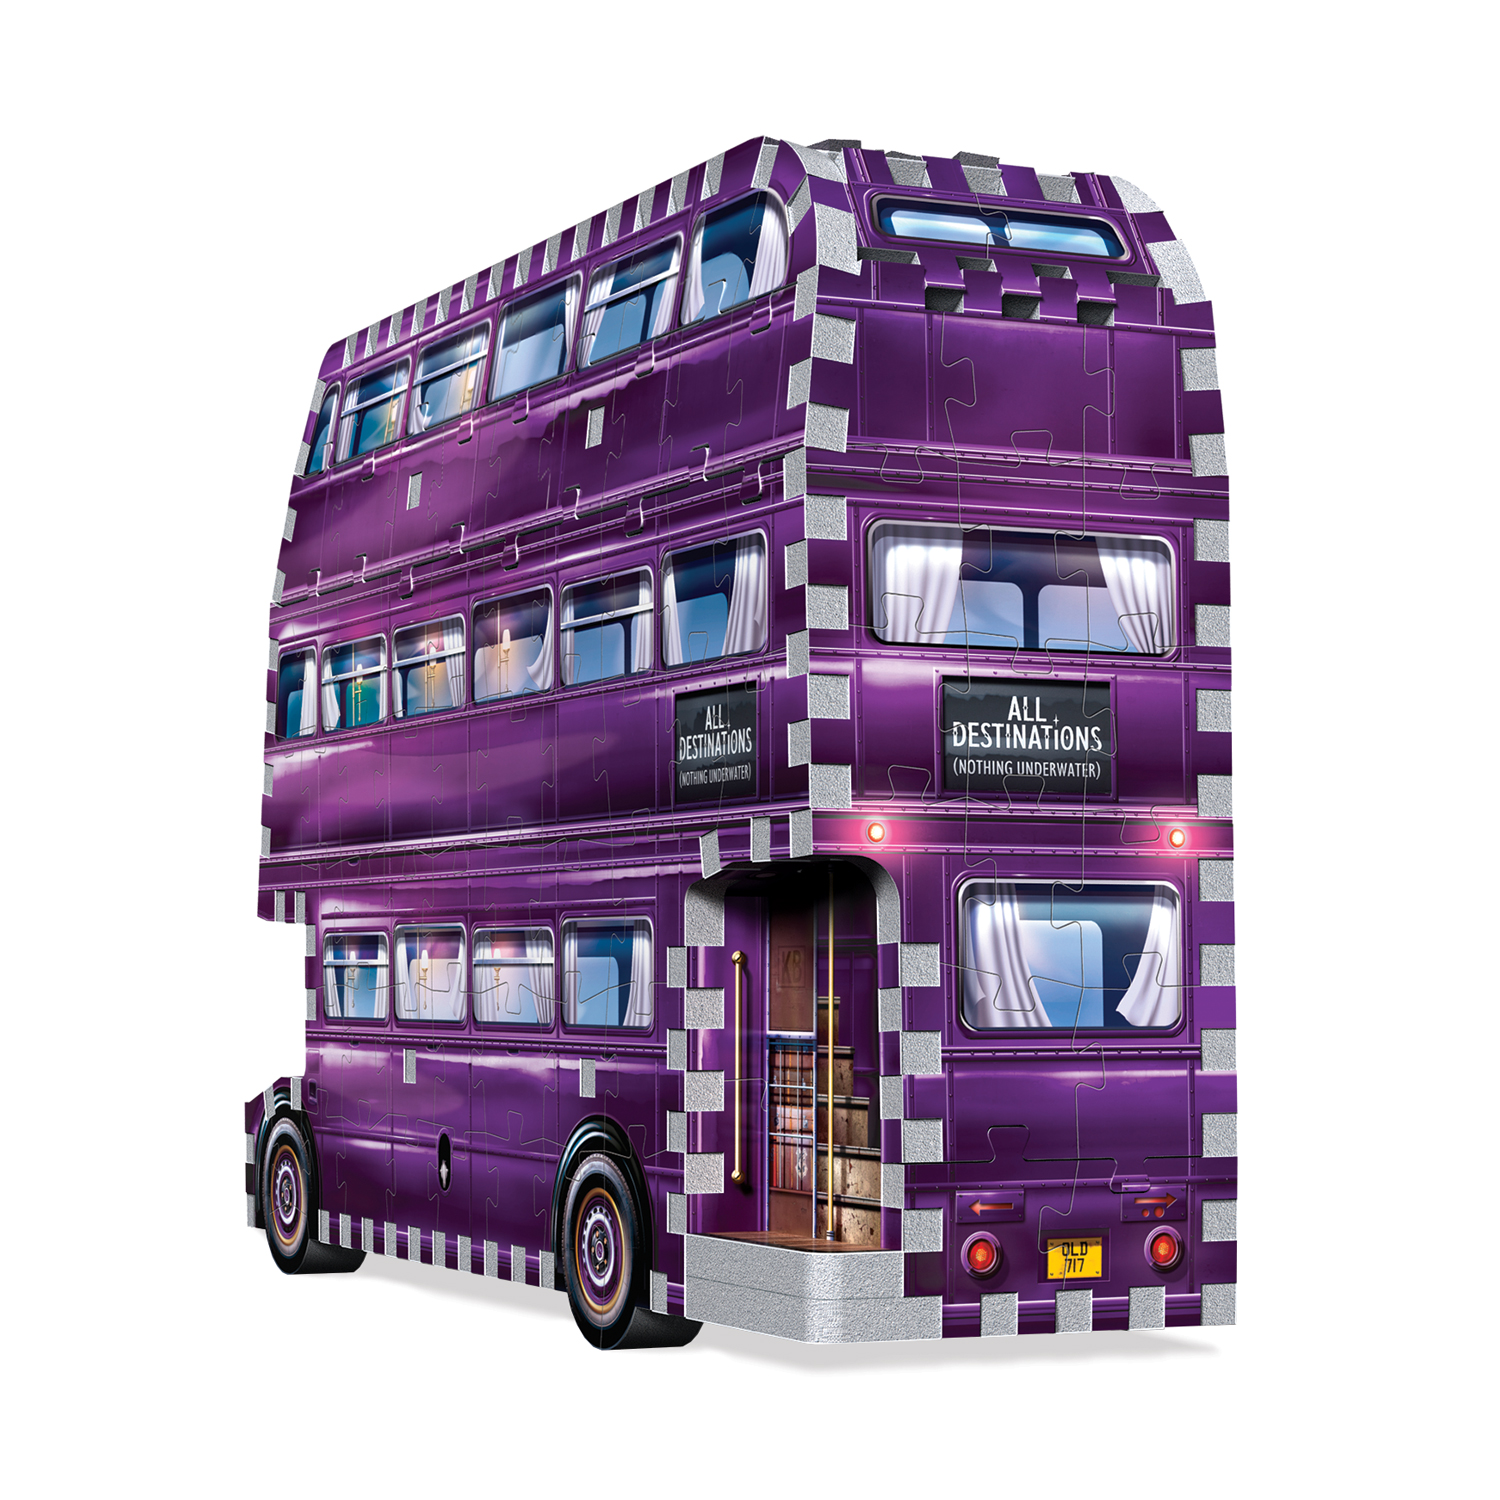 Knight Bus Harry Potter, 3D Vehicles, 3D Puzzles